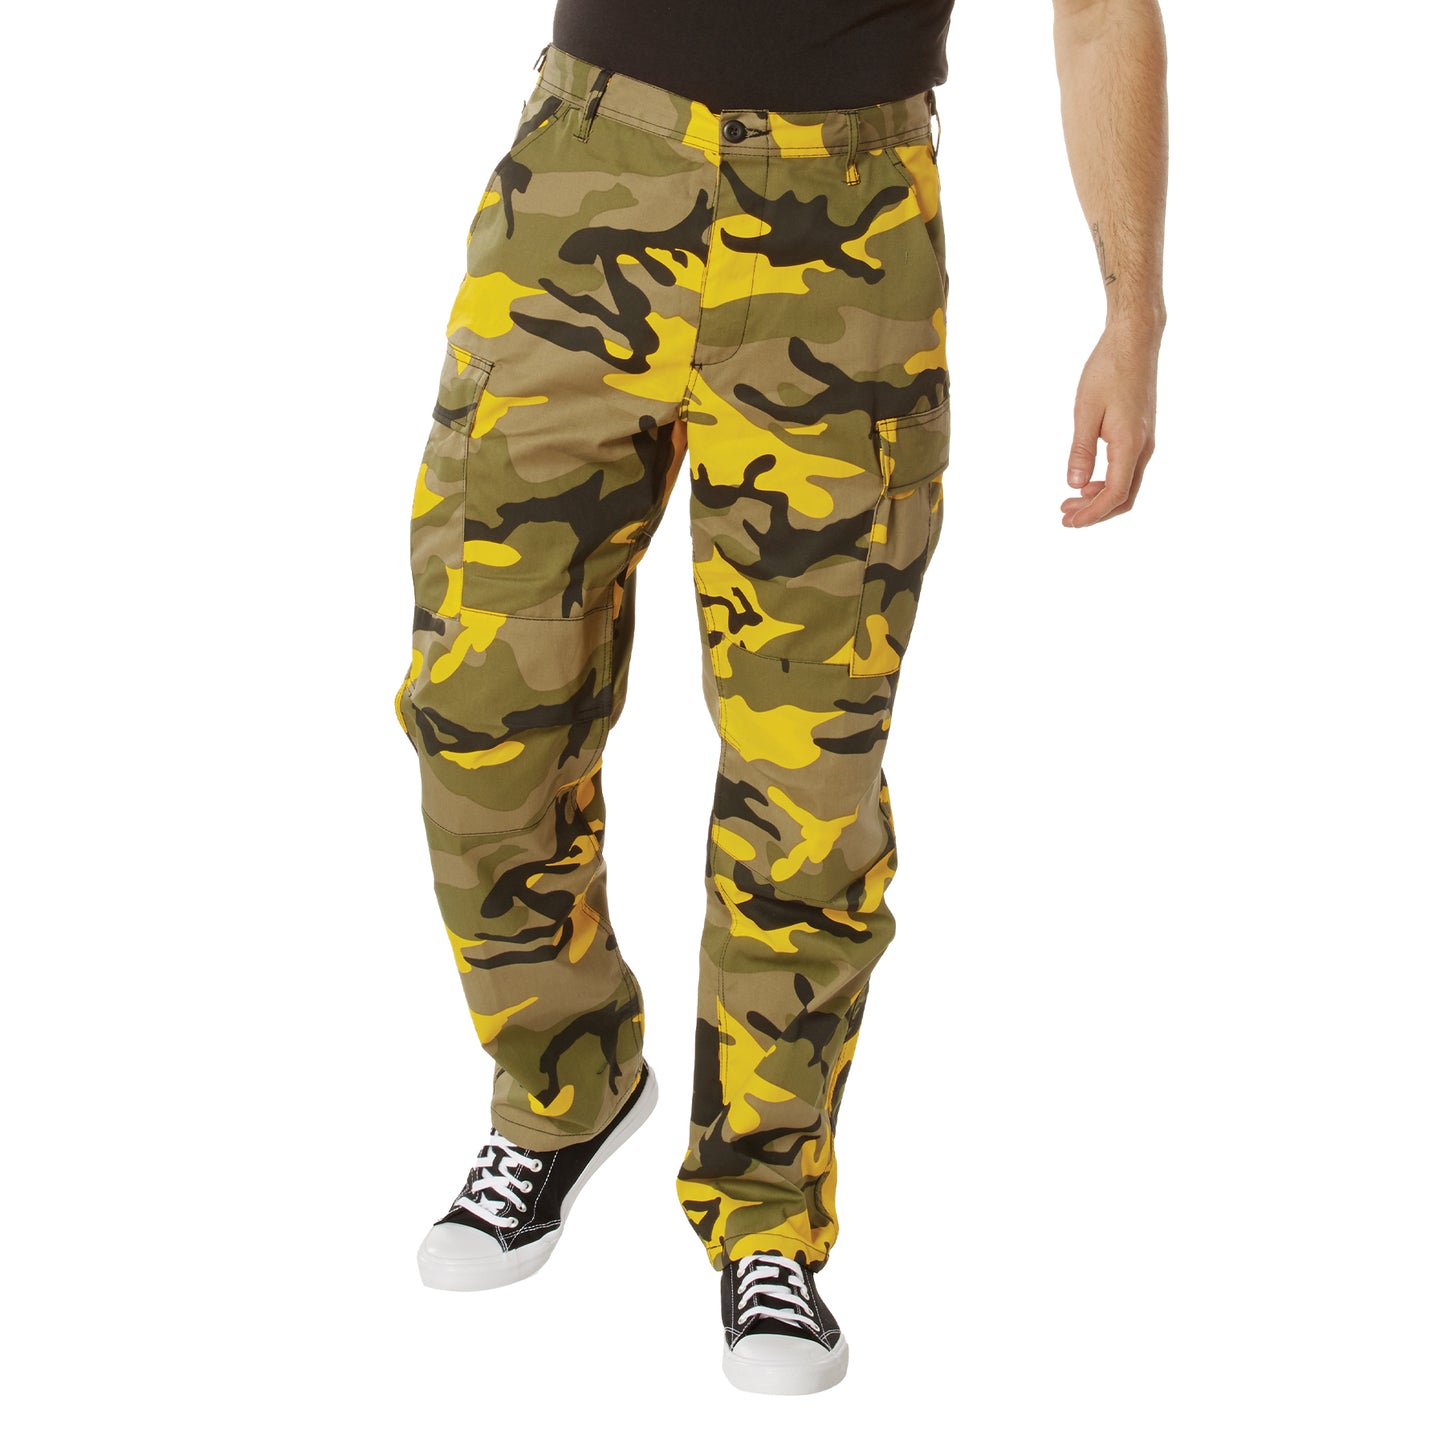 Rothco Color Camo Tactical BDU Pants - Yellow Stinger Camo